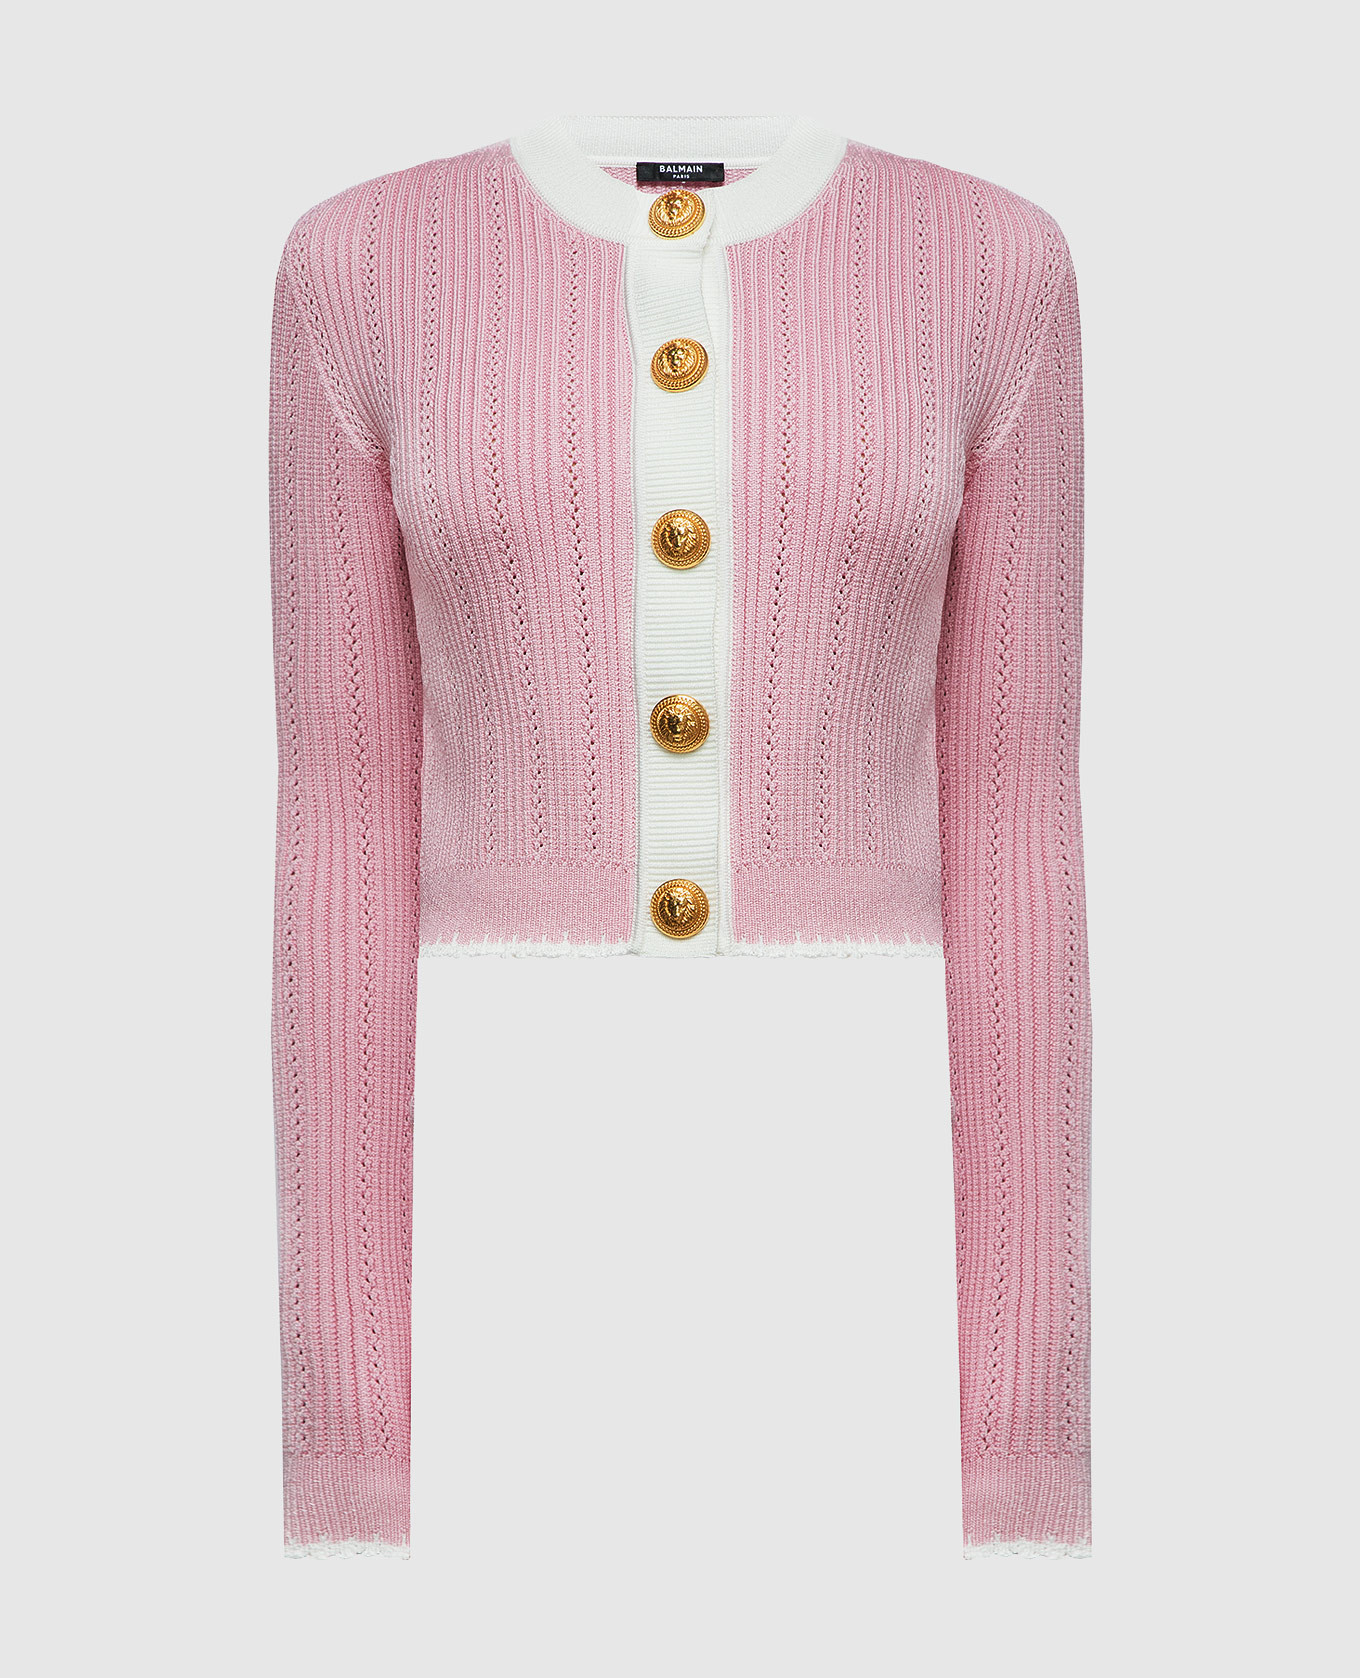 Pink cardigan in textured pattern